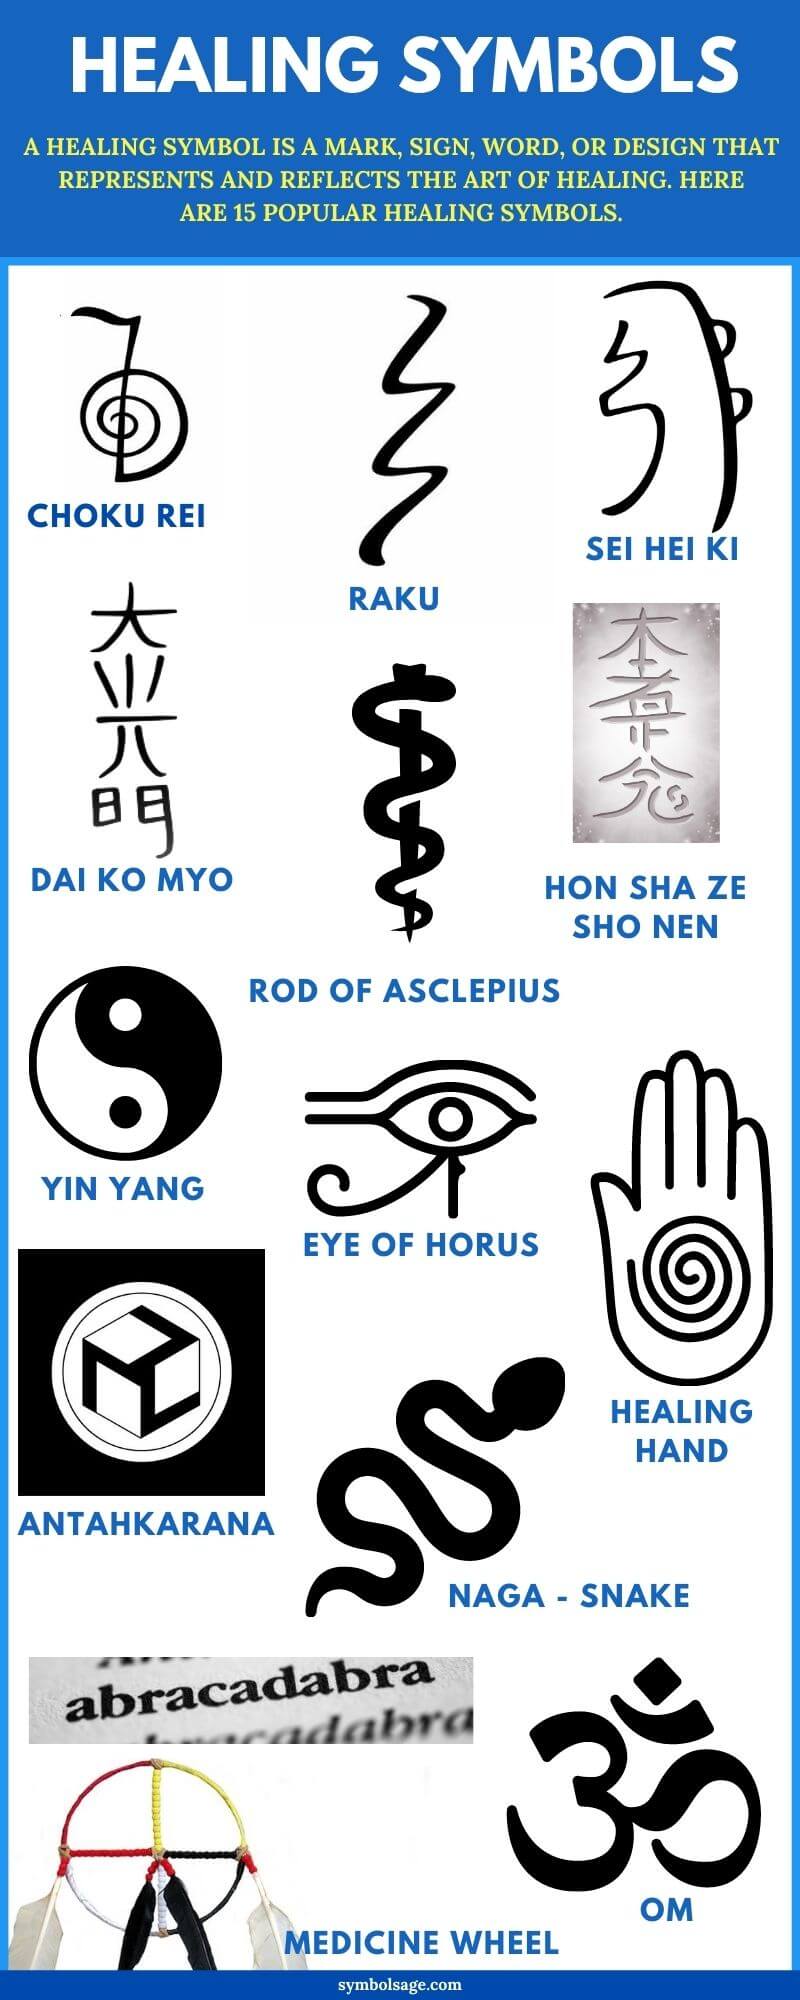 List of healing symbols